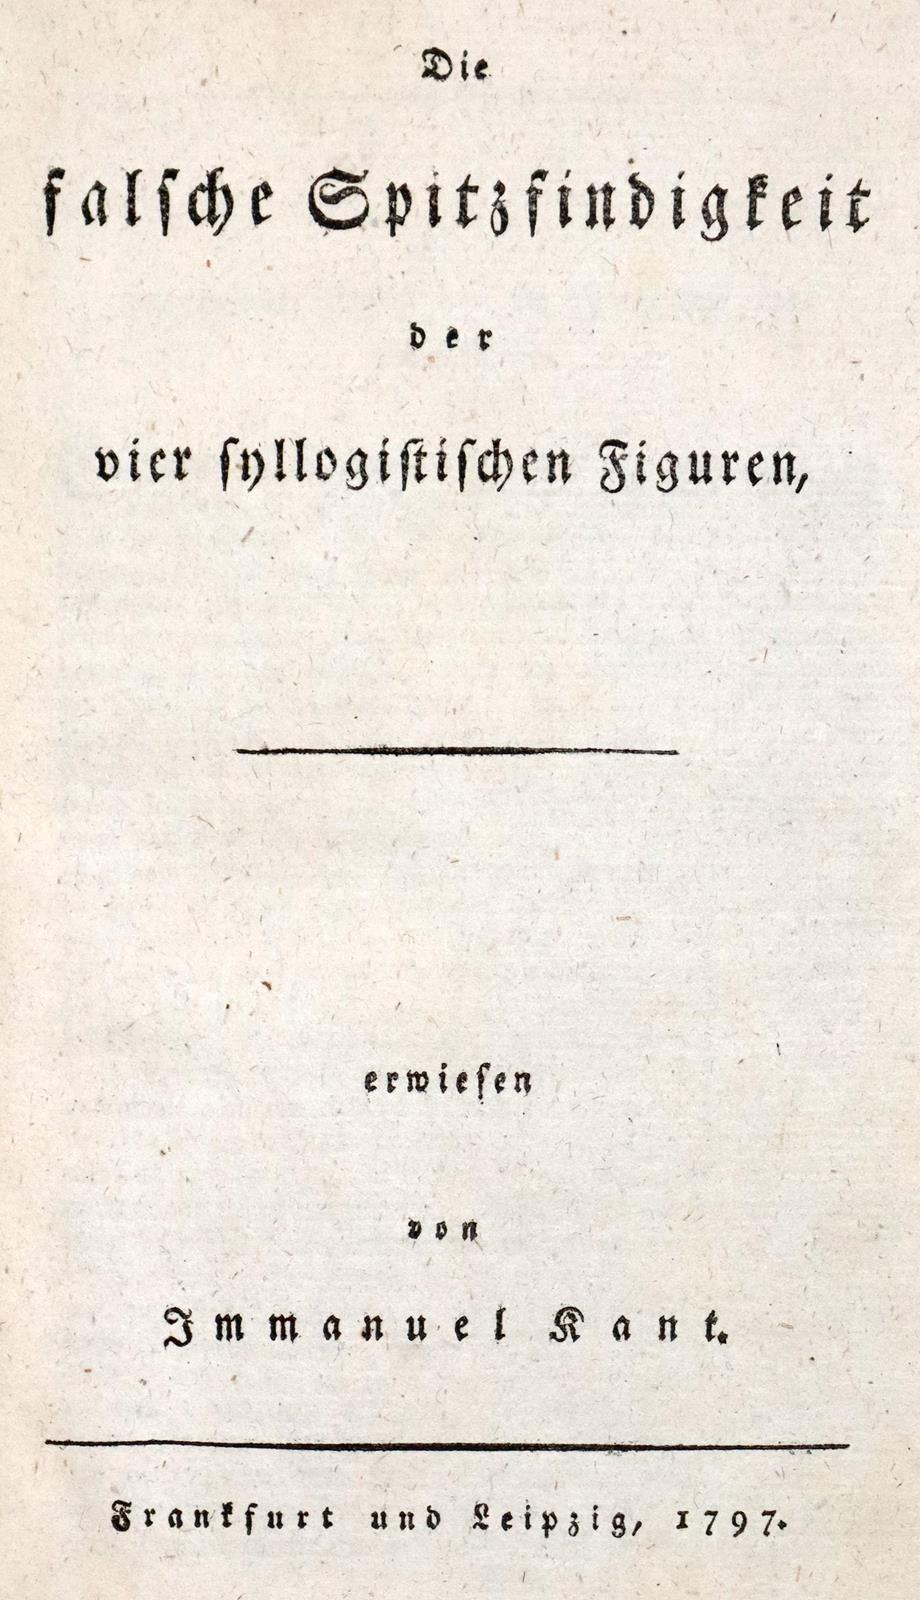 Kant,I. | Bild Nr.1